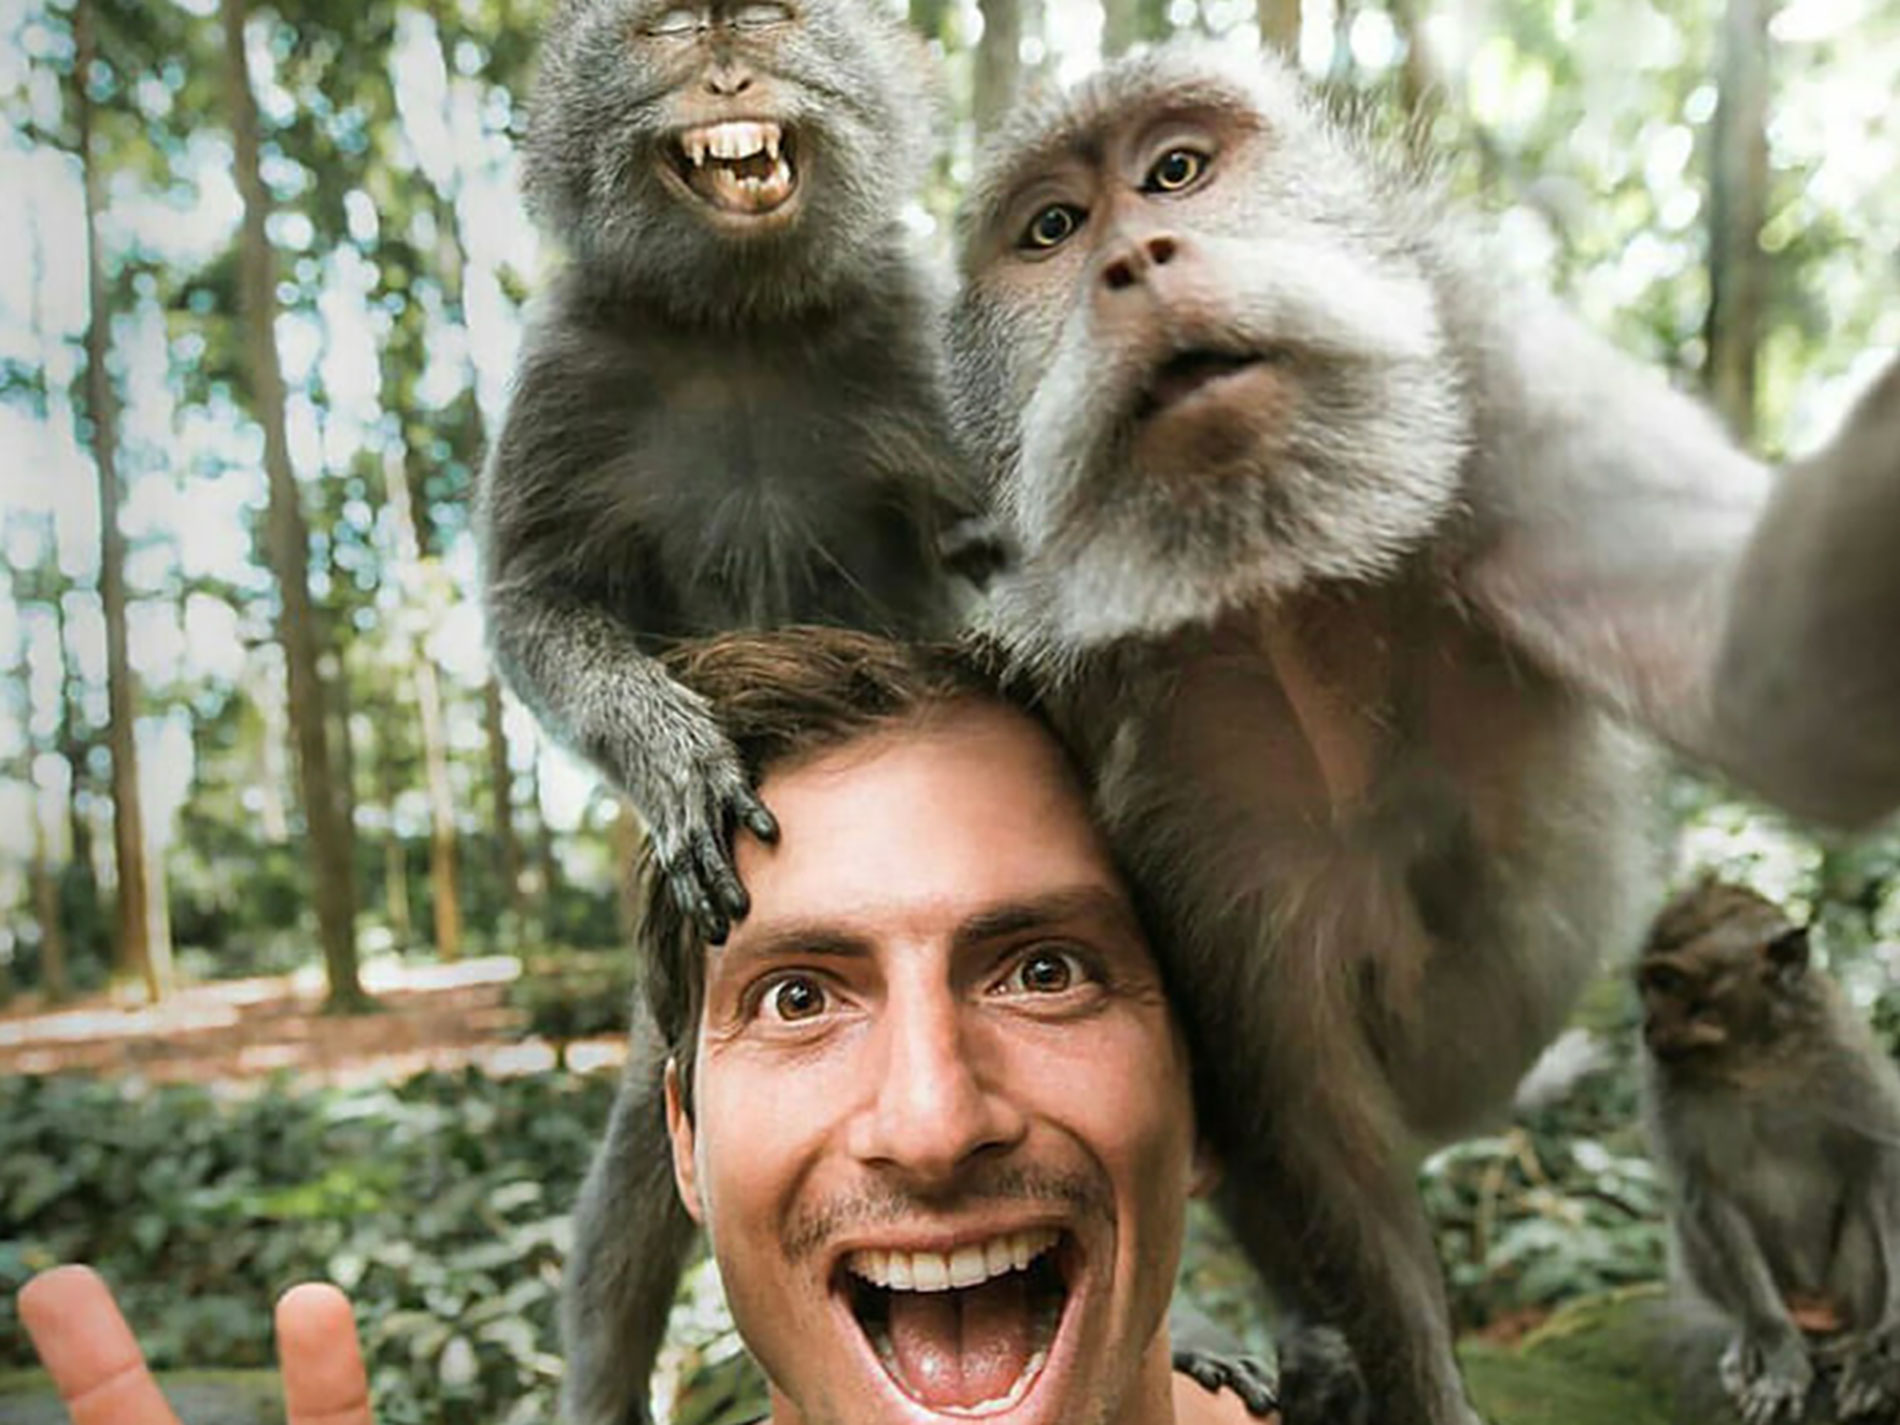 Money taking selfie sitting on man's shoulder, monkeys and man are smiling